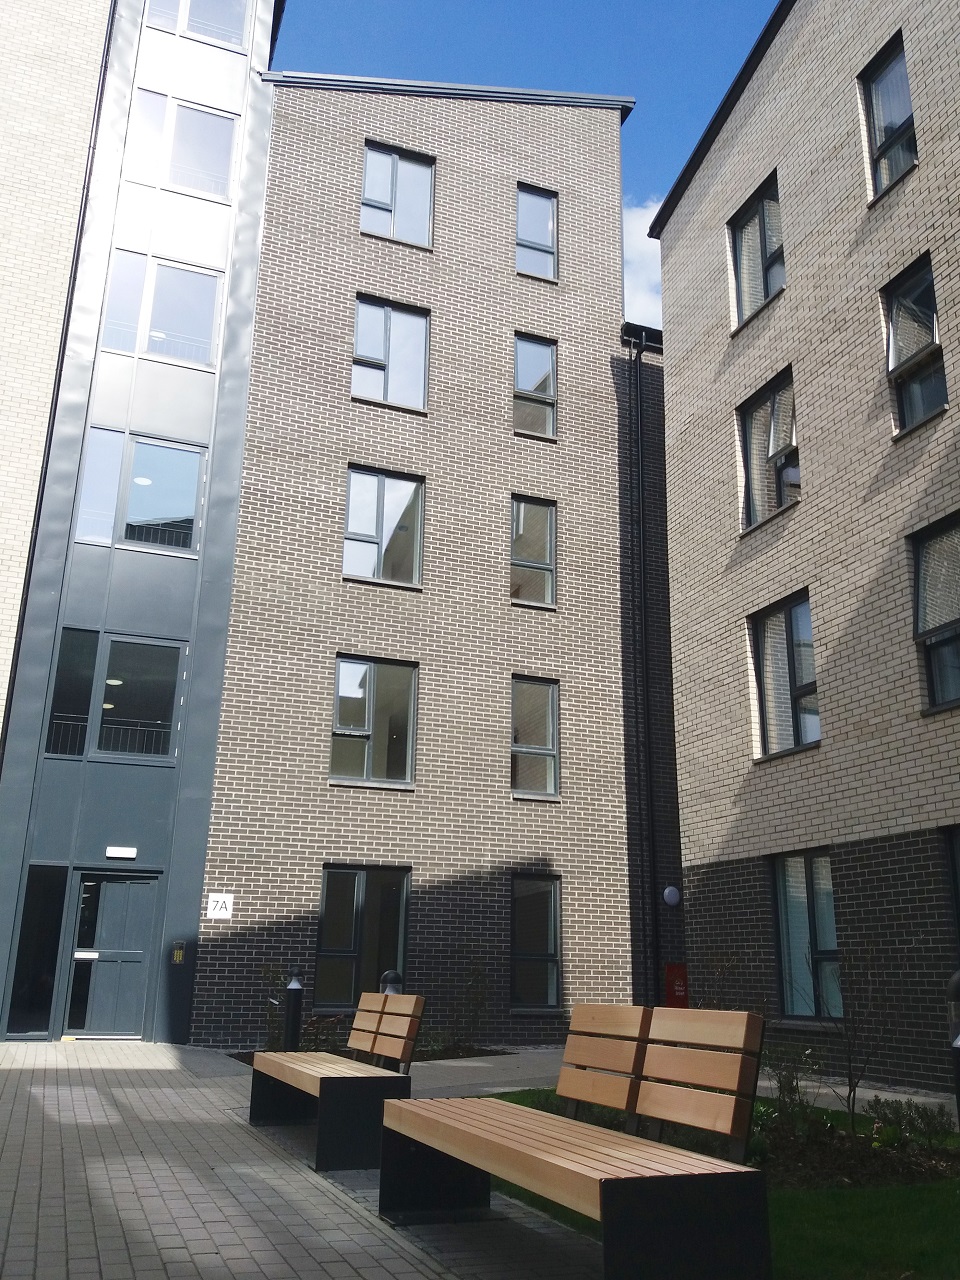 Hillcrest reaches completion at Edinburgh development